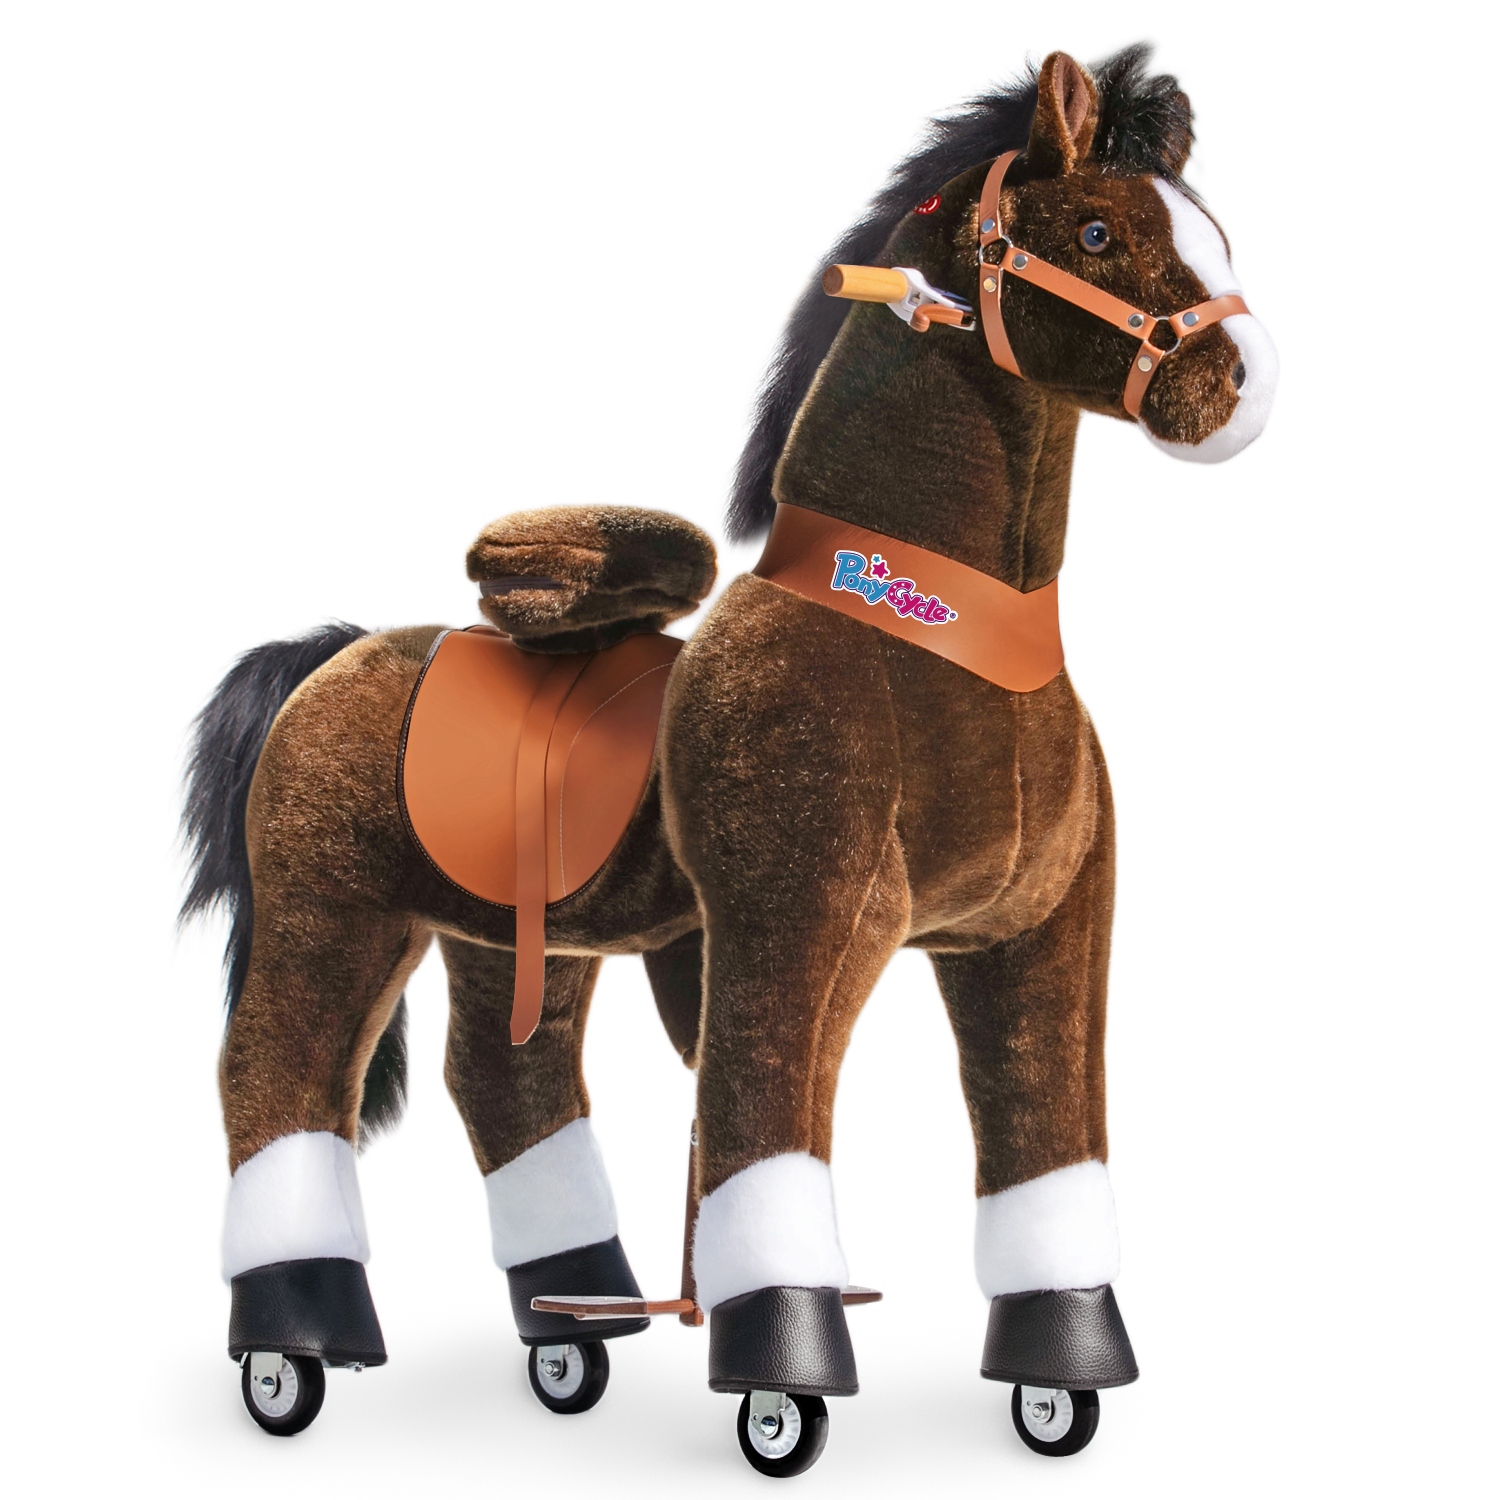 PonyCycle Official U Chocolate Brown Ride on Horse Toy Plush Medium Age 4-8 U421 